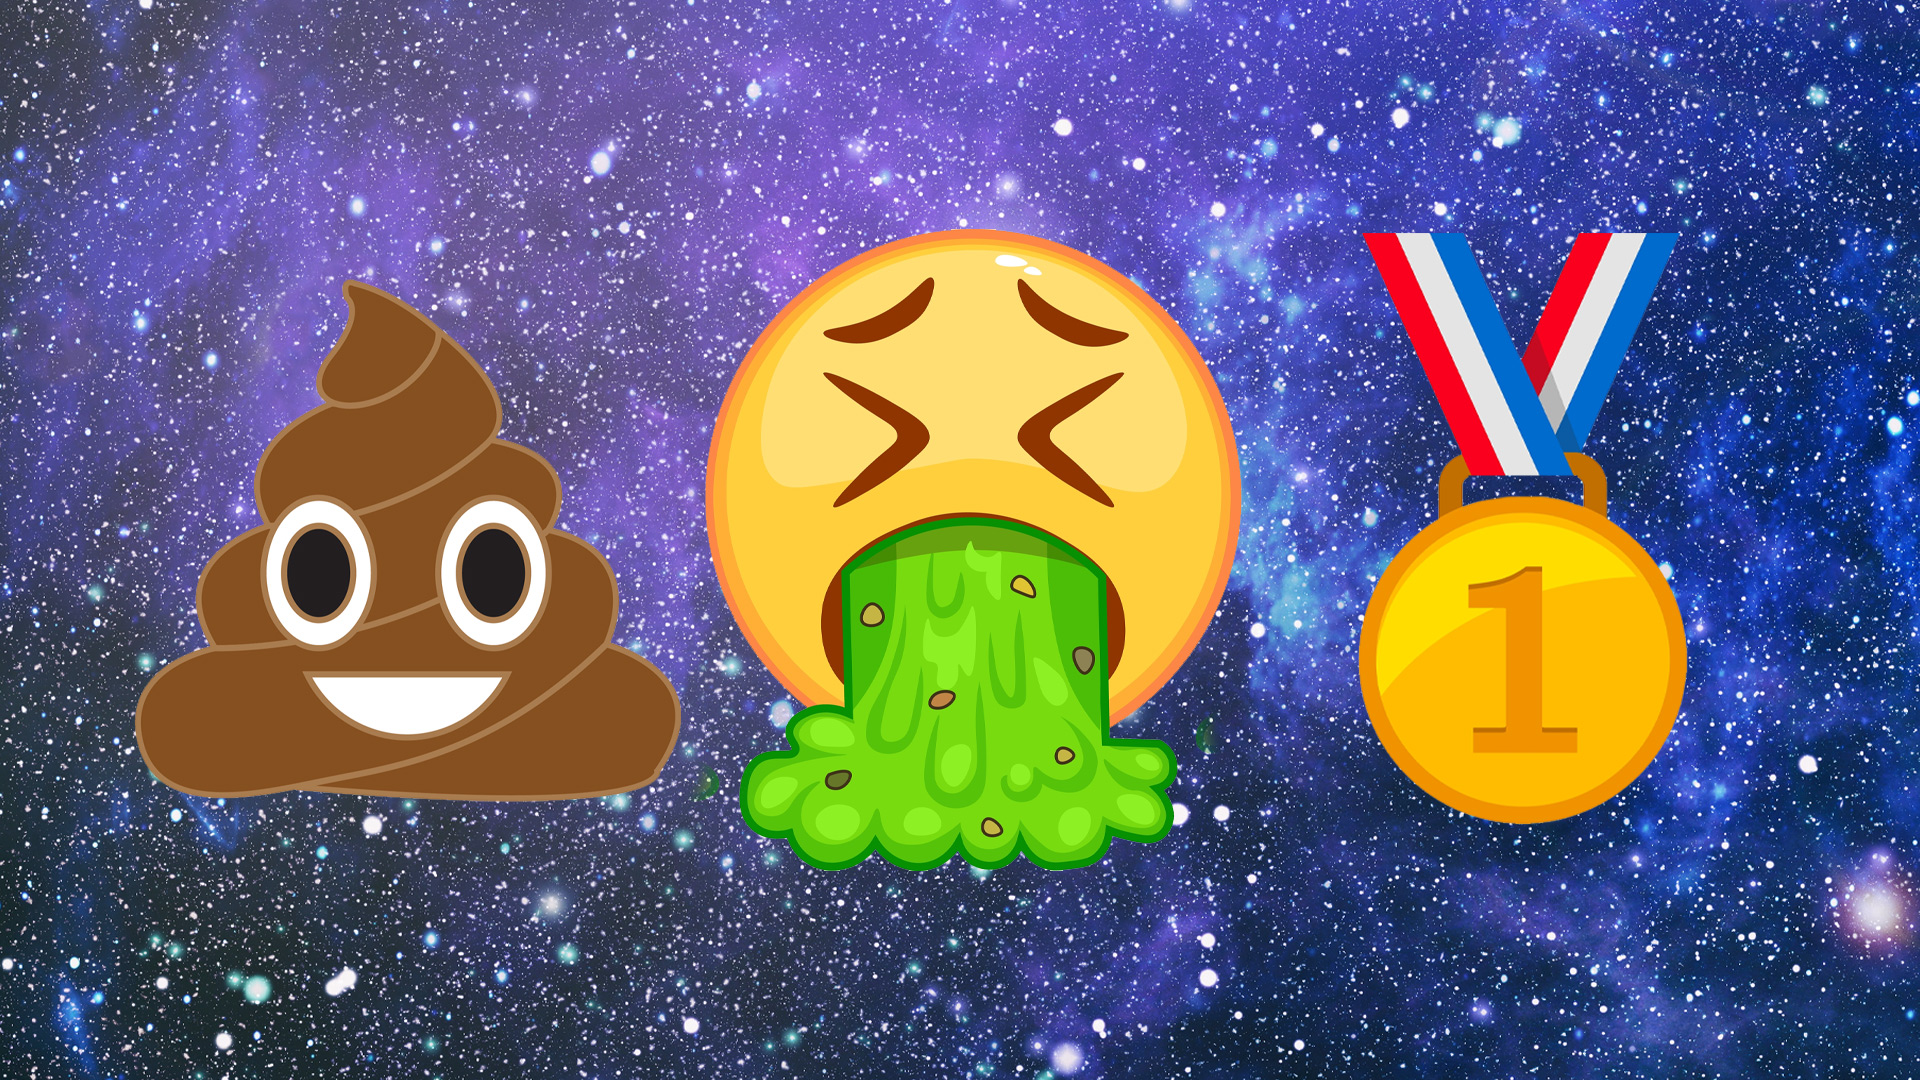 Poop emoji, ill emoji, gold medal emoji